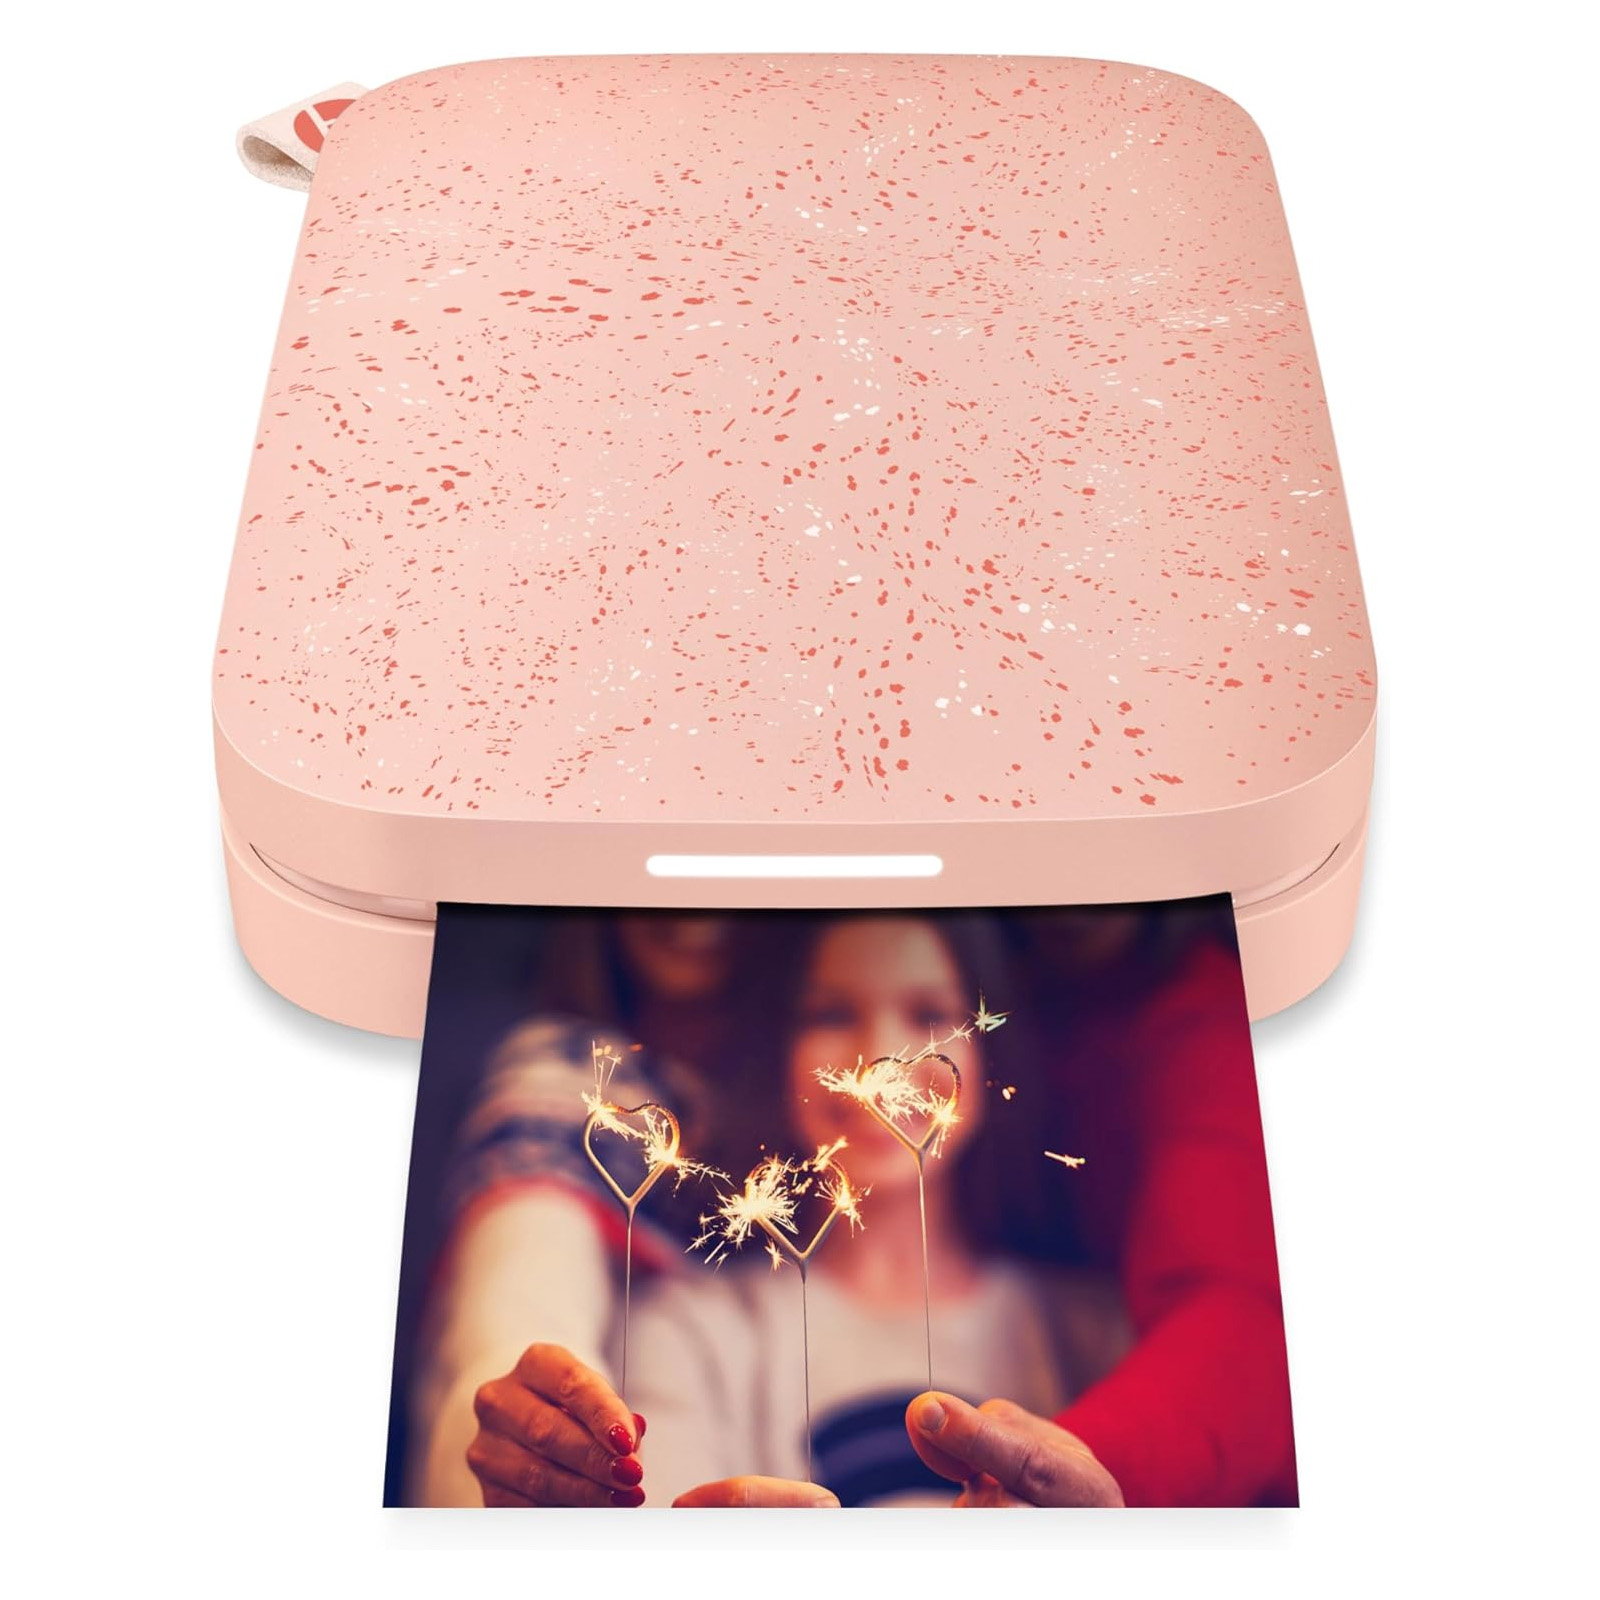 HP Sprocket Pink Portable Photo Printer